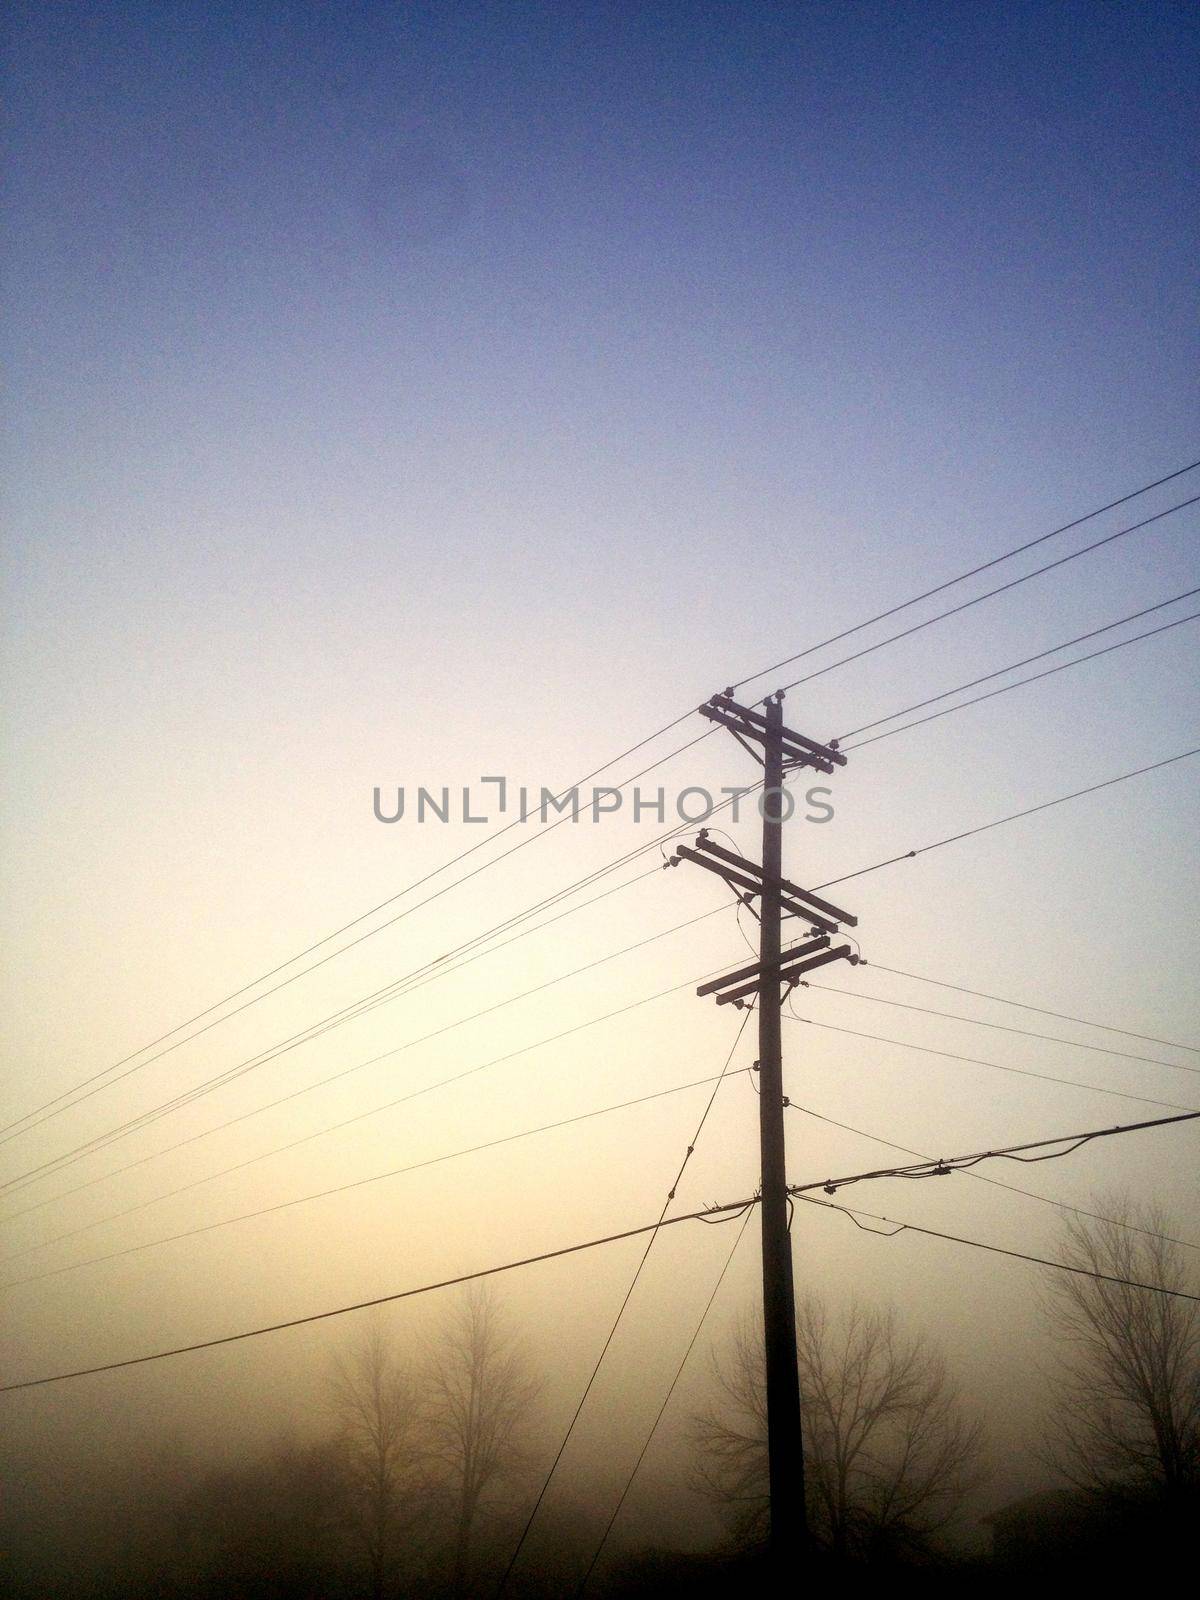 Image of Hazy telephone pole with leafless trees and a grayish blue sky